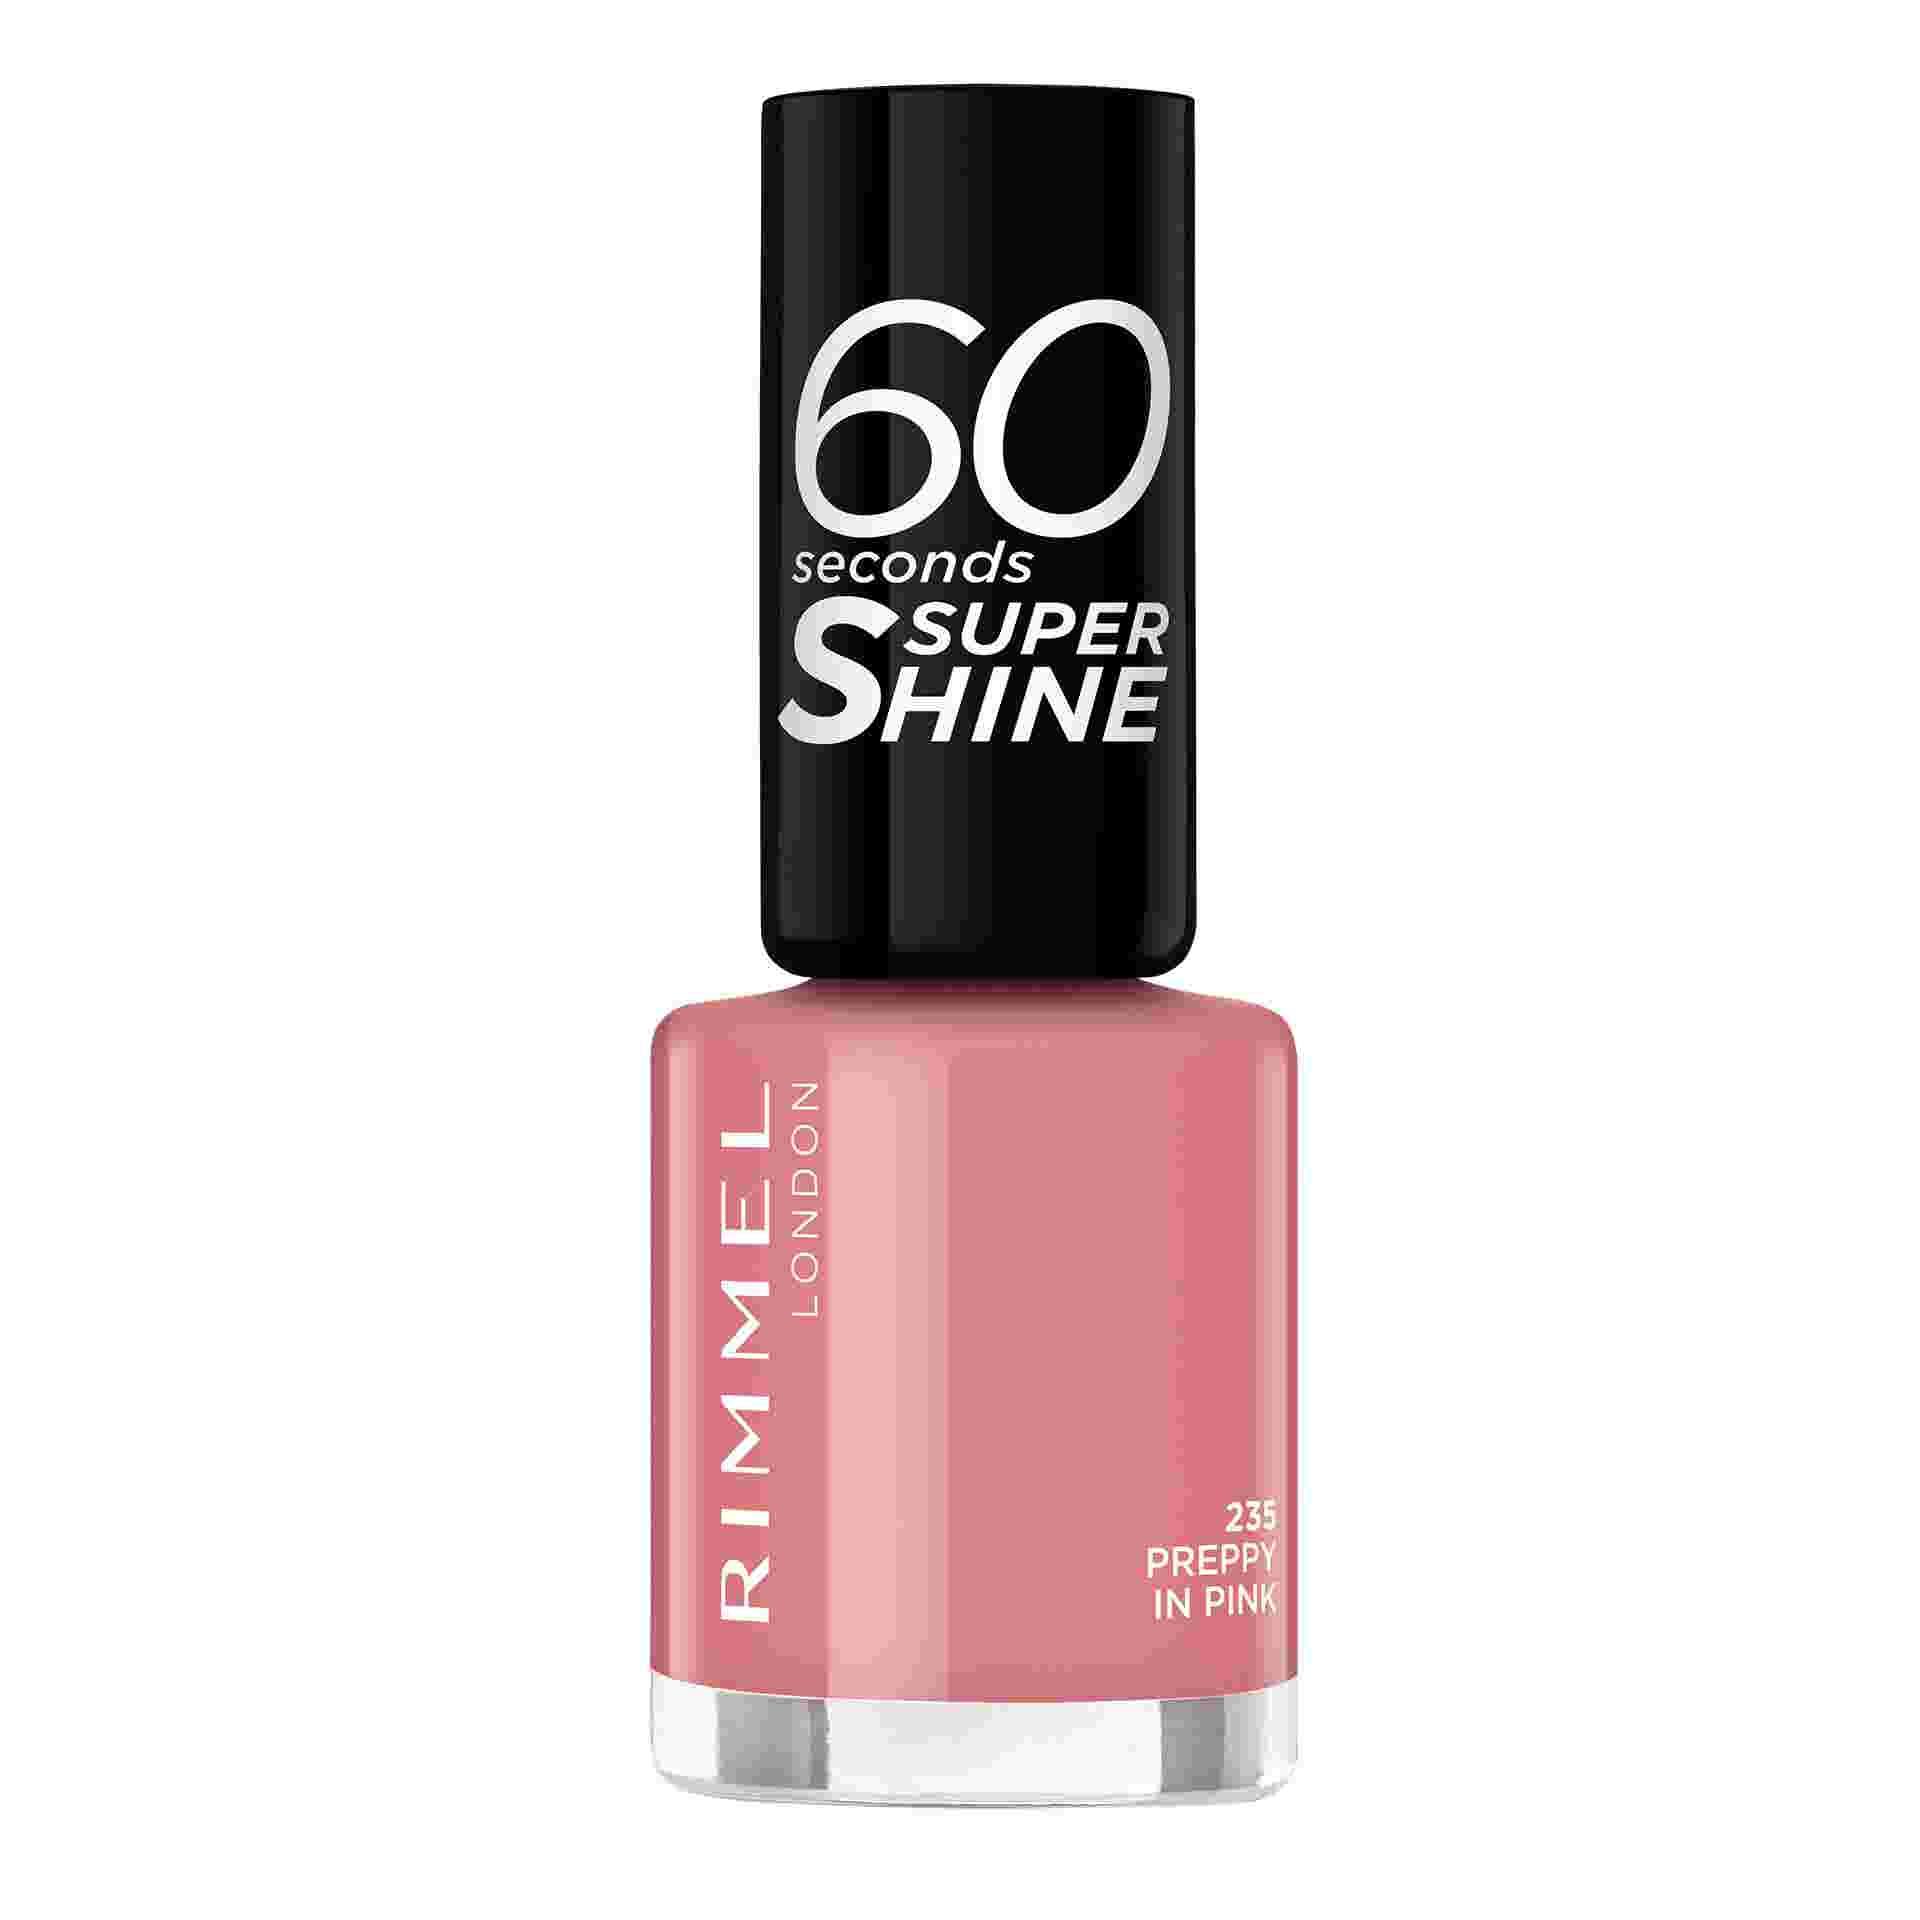 Nail Polish - Rimmel 60 Seconds Super Shine 235 - Preppy In Pink